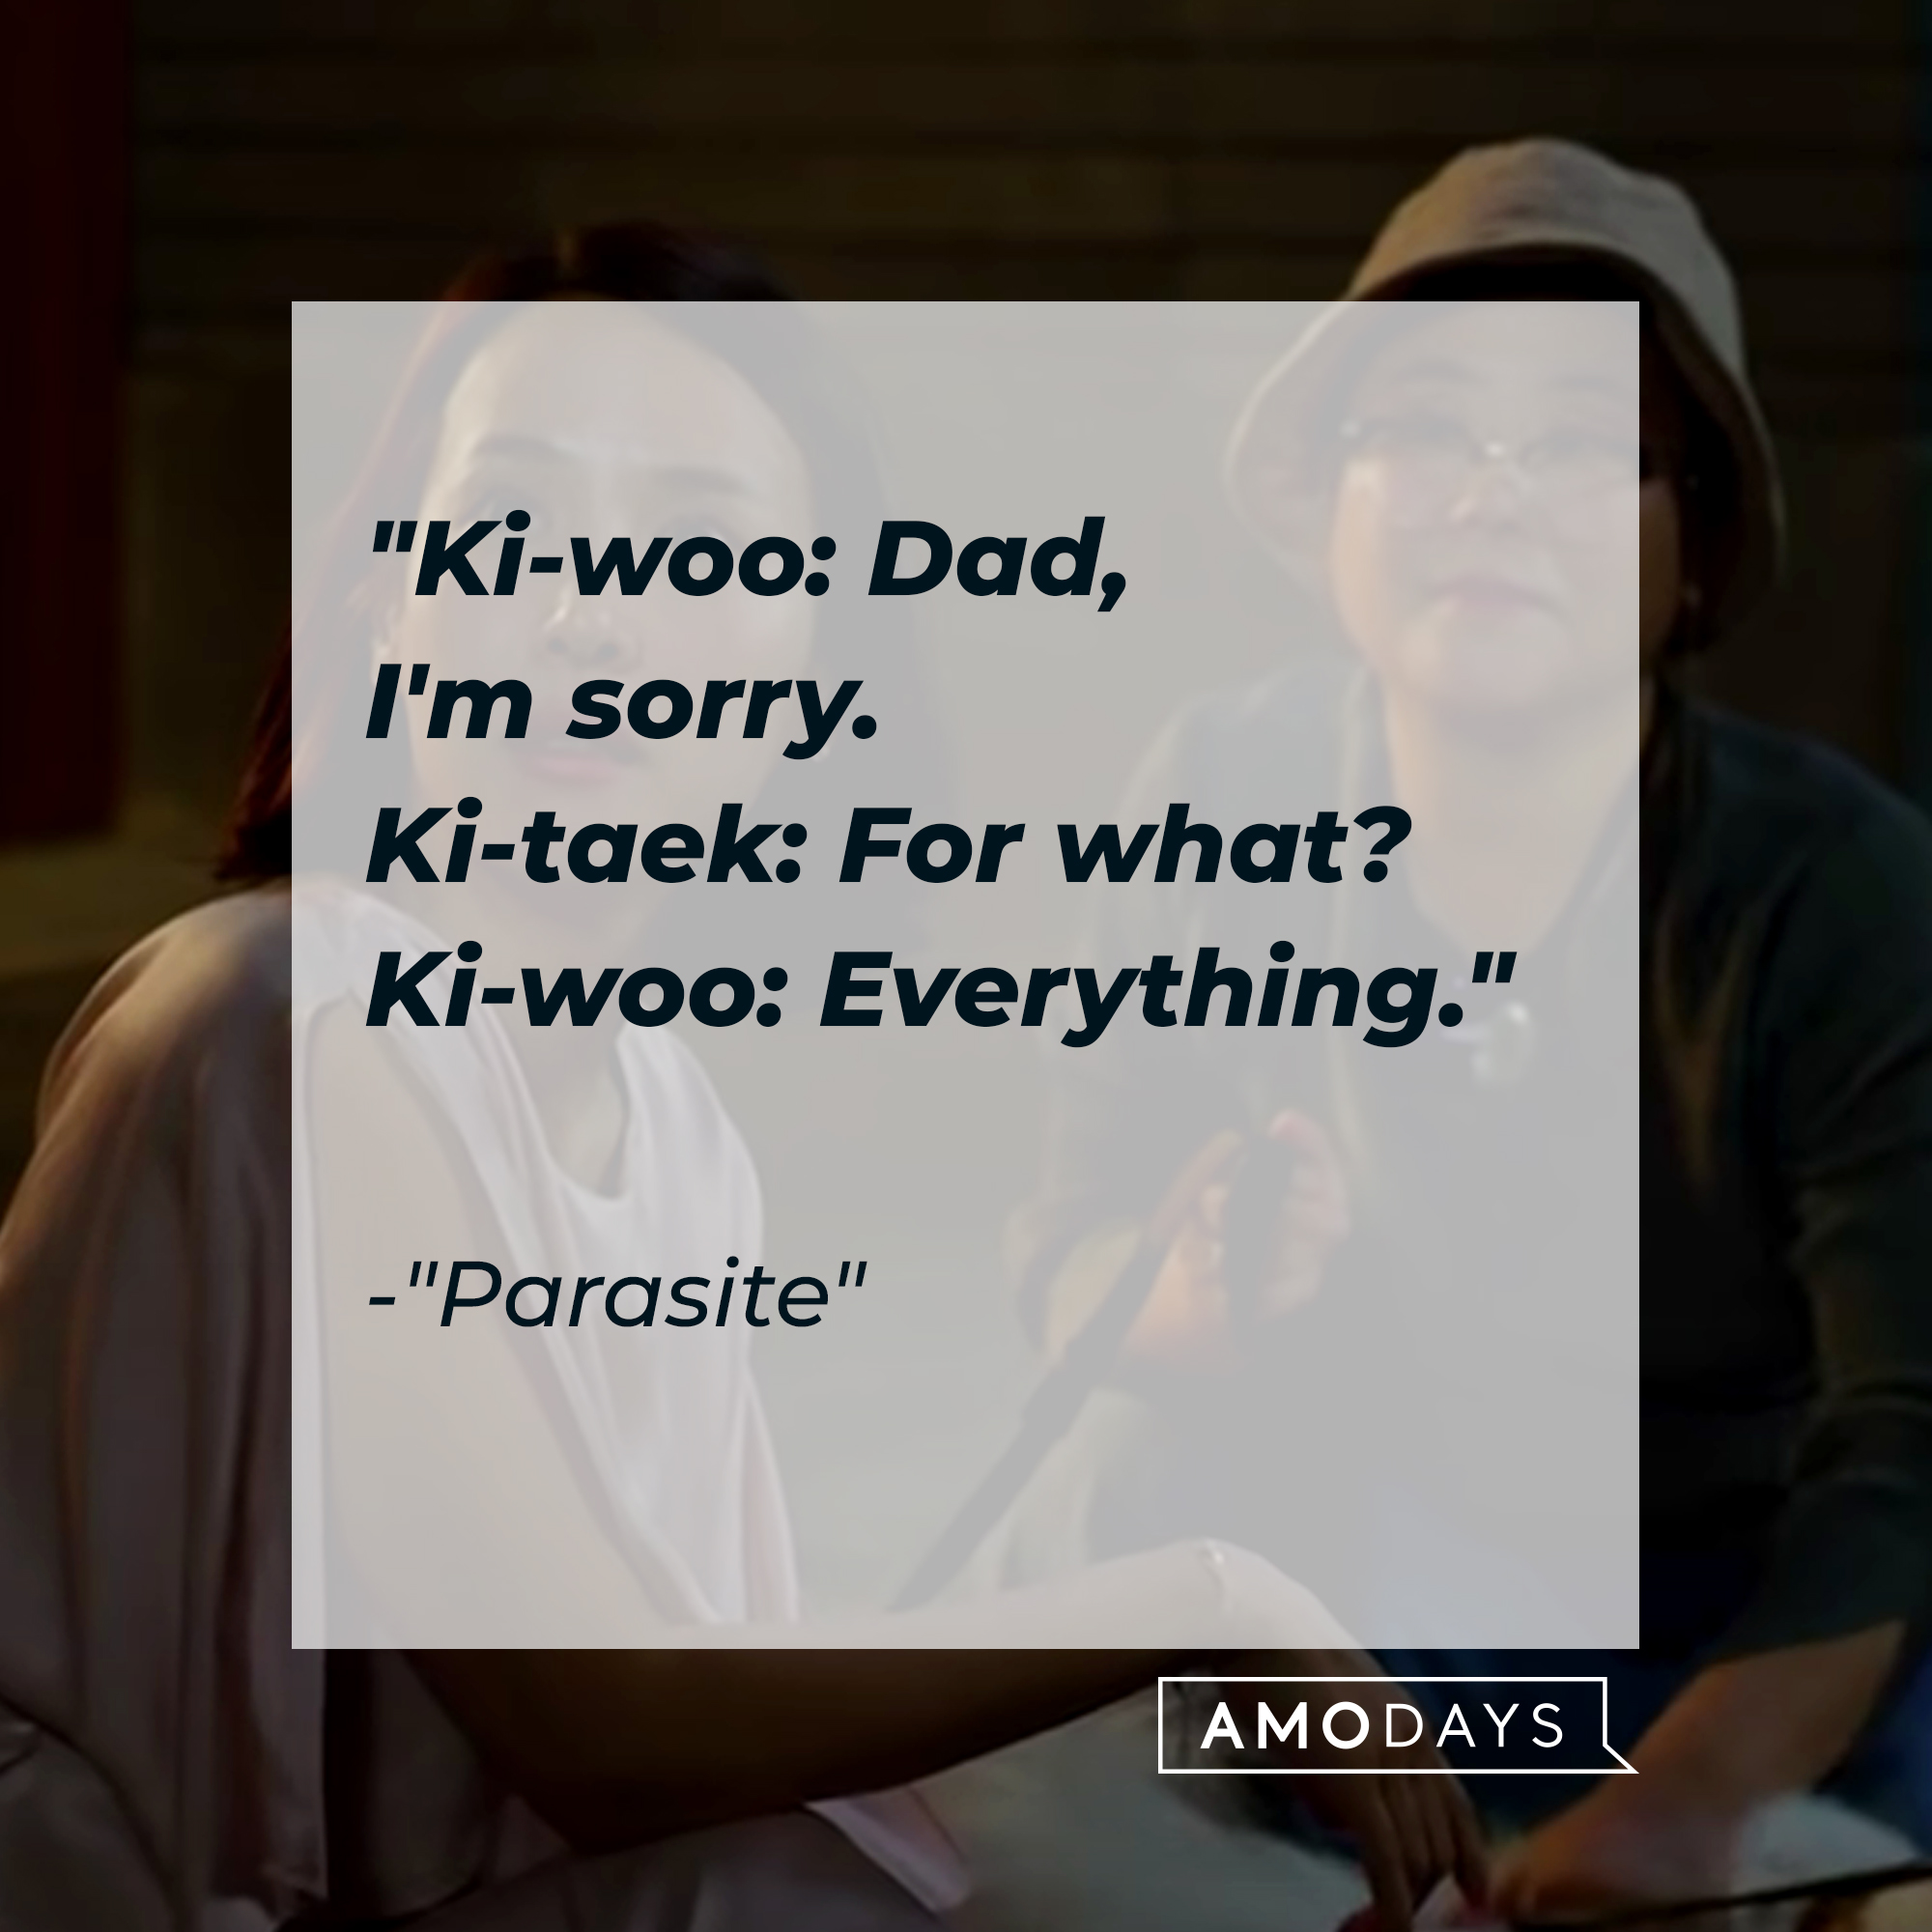 Ki-taek and Ki-woo's dialogue: "Ki-woo: Dad, I'm sorry. ; Ki-taek: For what? ; Ki-woo: Everything."  | Source: Facebook.com/ParasiteMovie